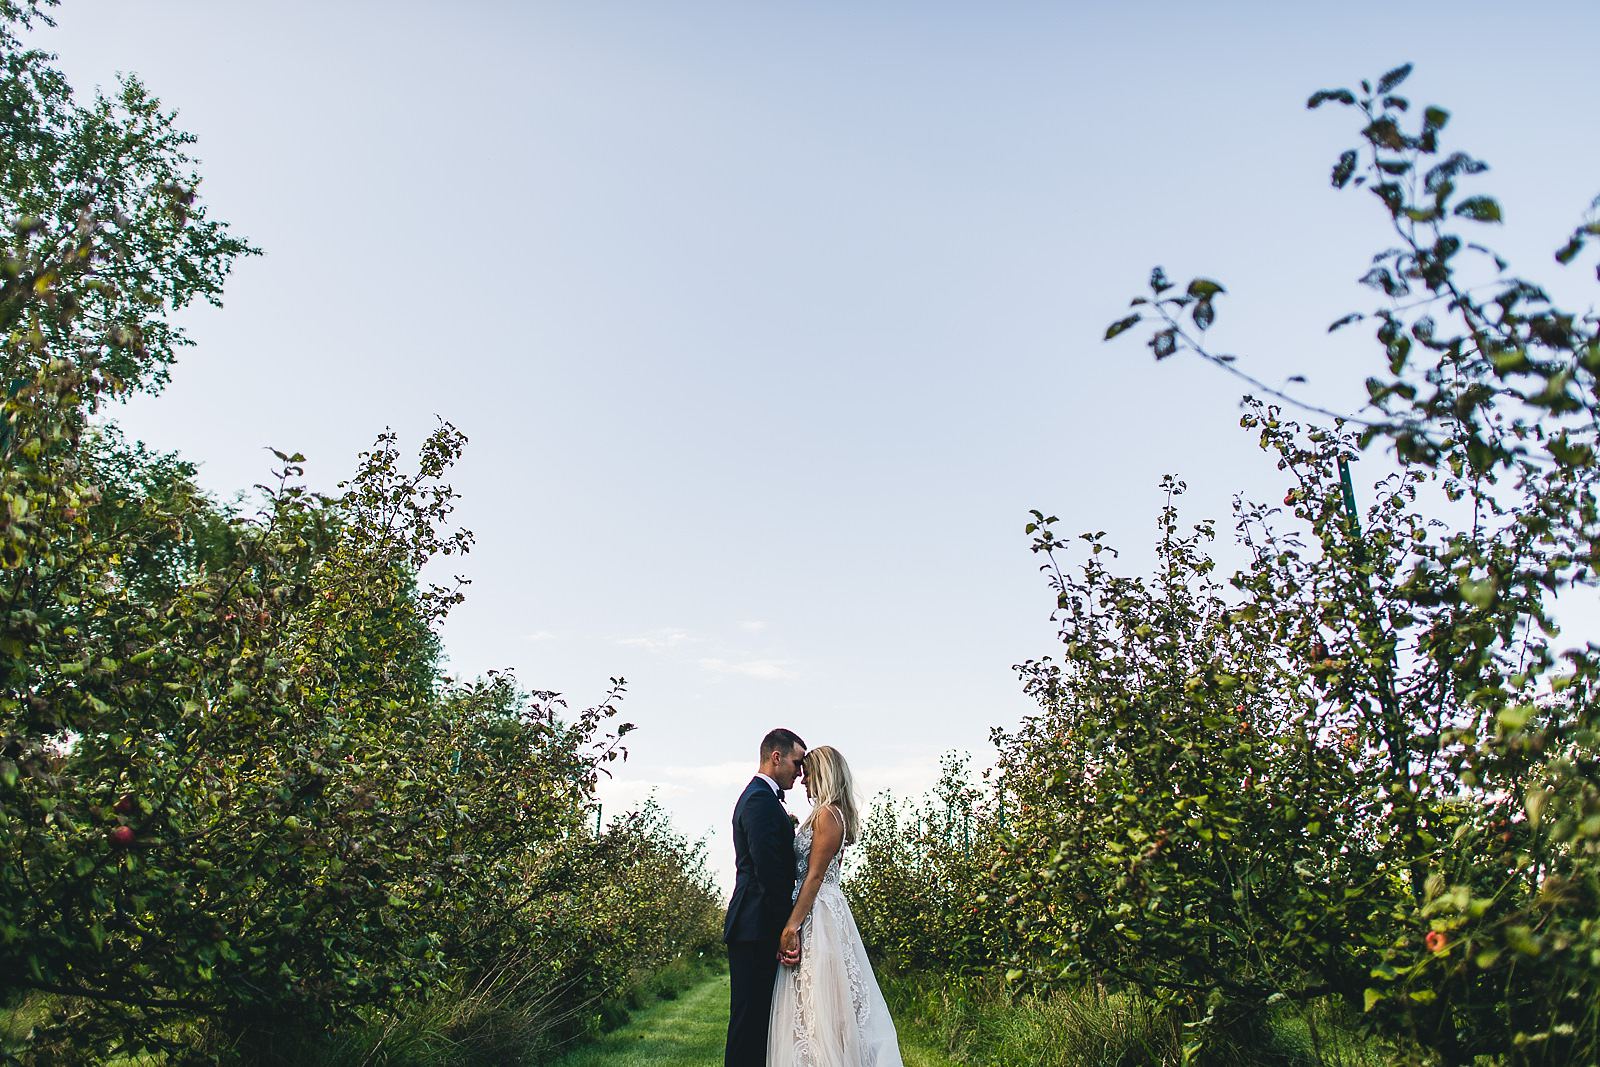 30 orchard ridge farms wedding - Orchard Ridge Farm Wedding // Brie + Jason